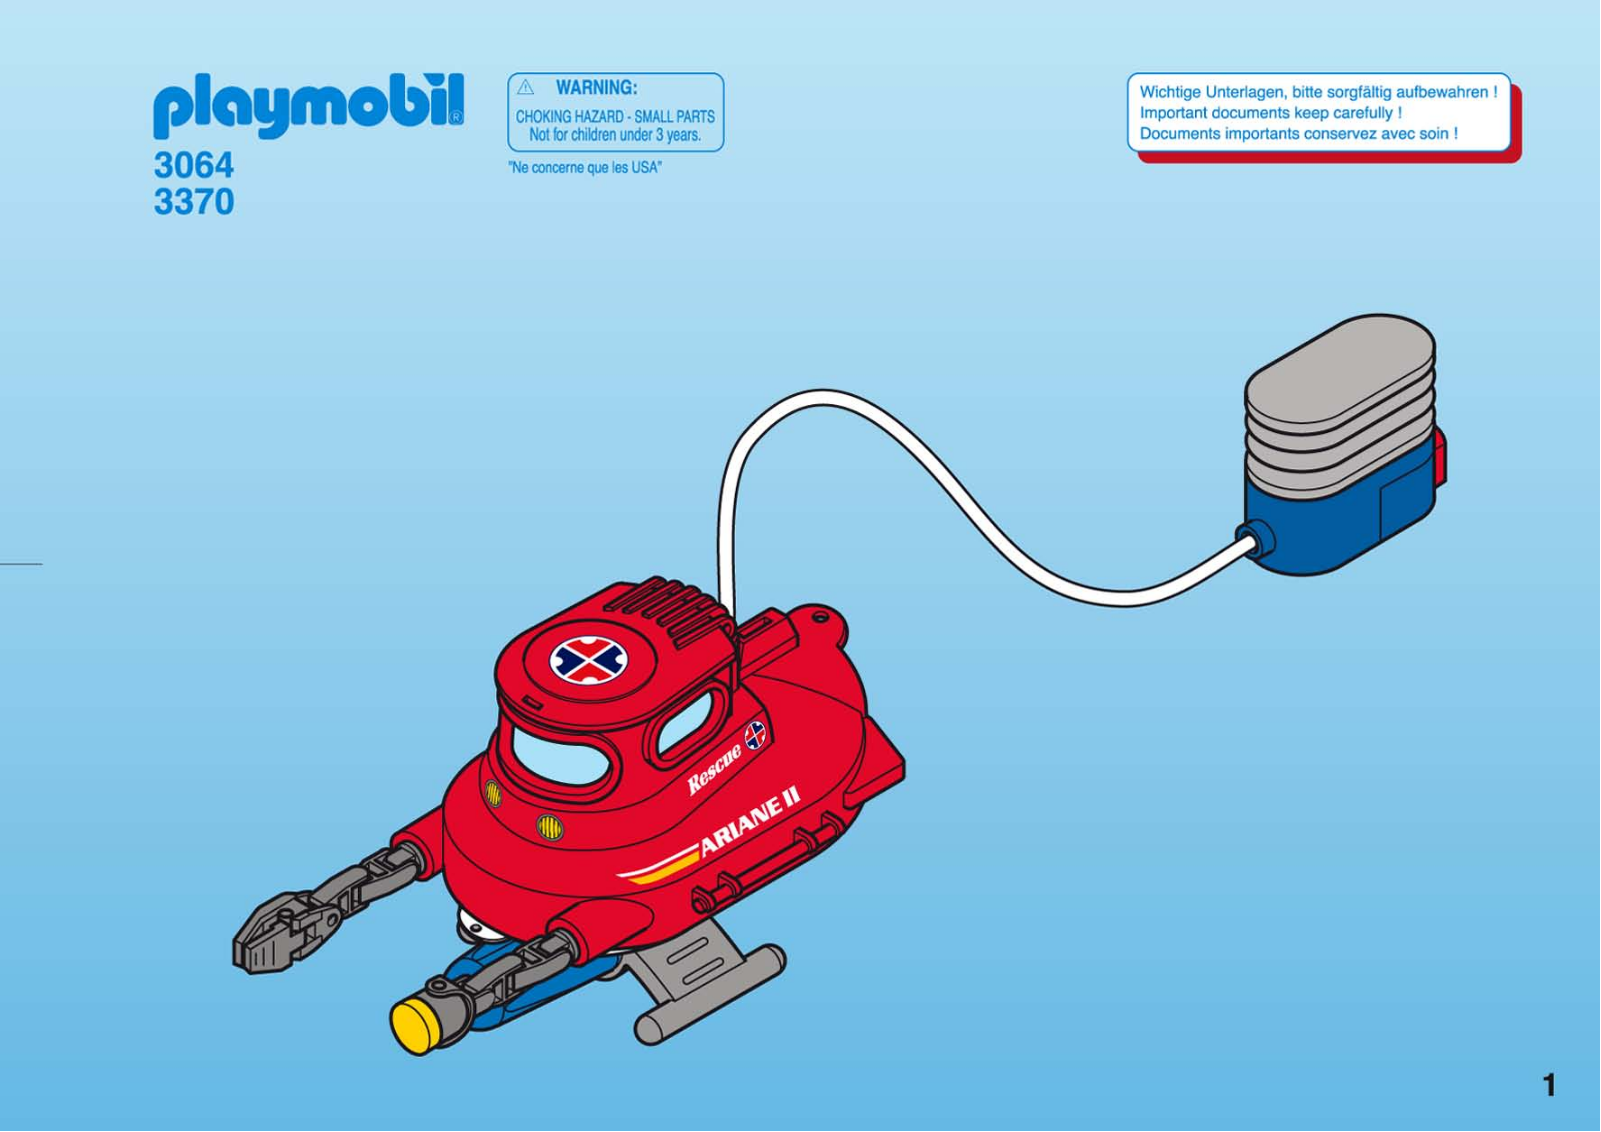 Playmobil 3064 Instructions